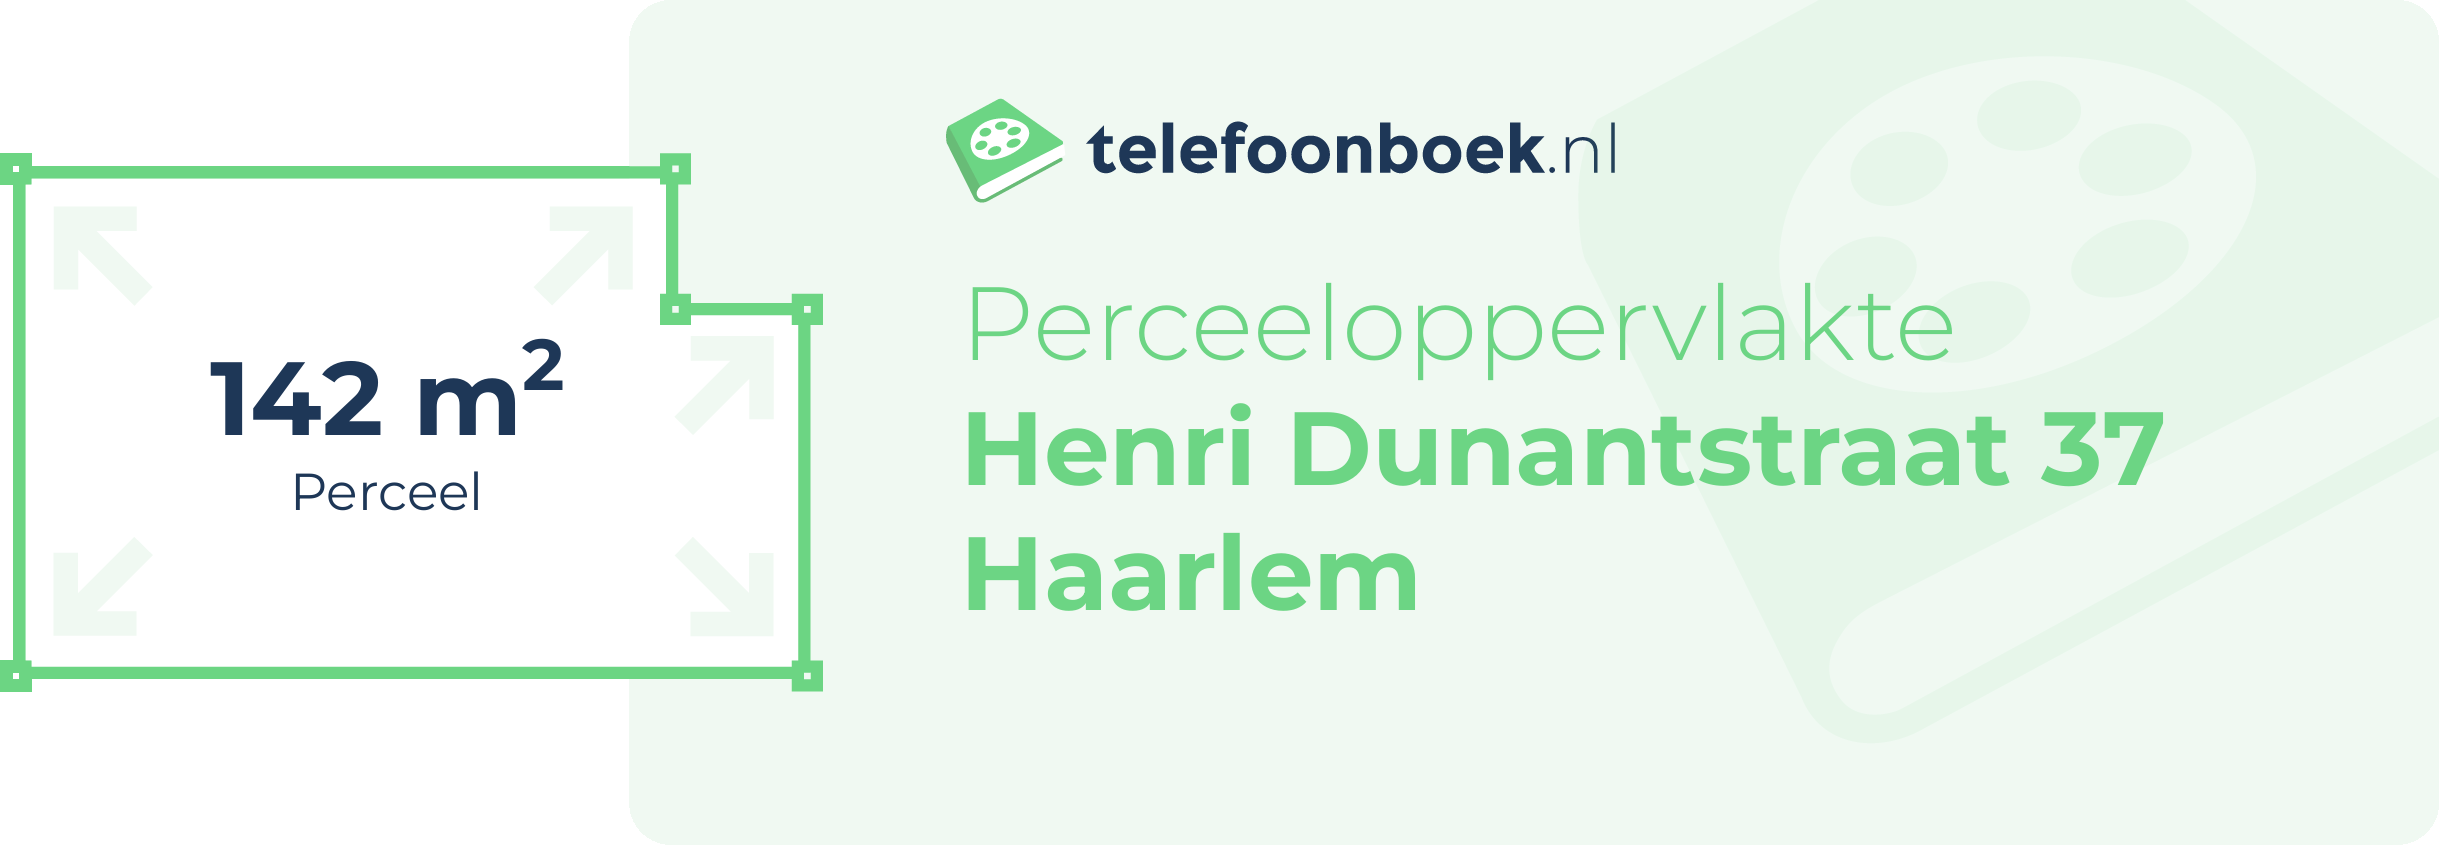 Perceeloppervlakte Henri Dunantstraat 37 Haarlem